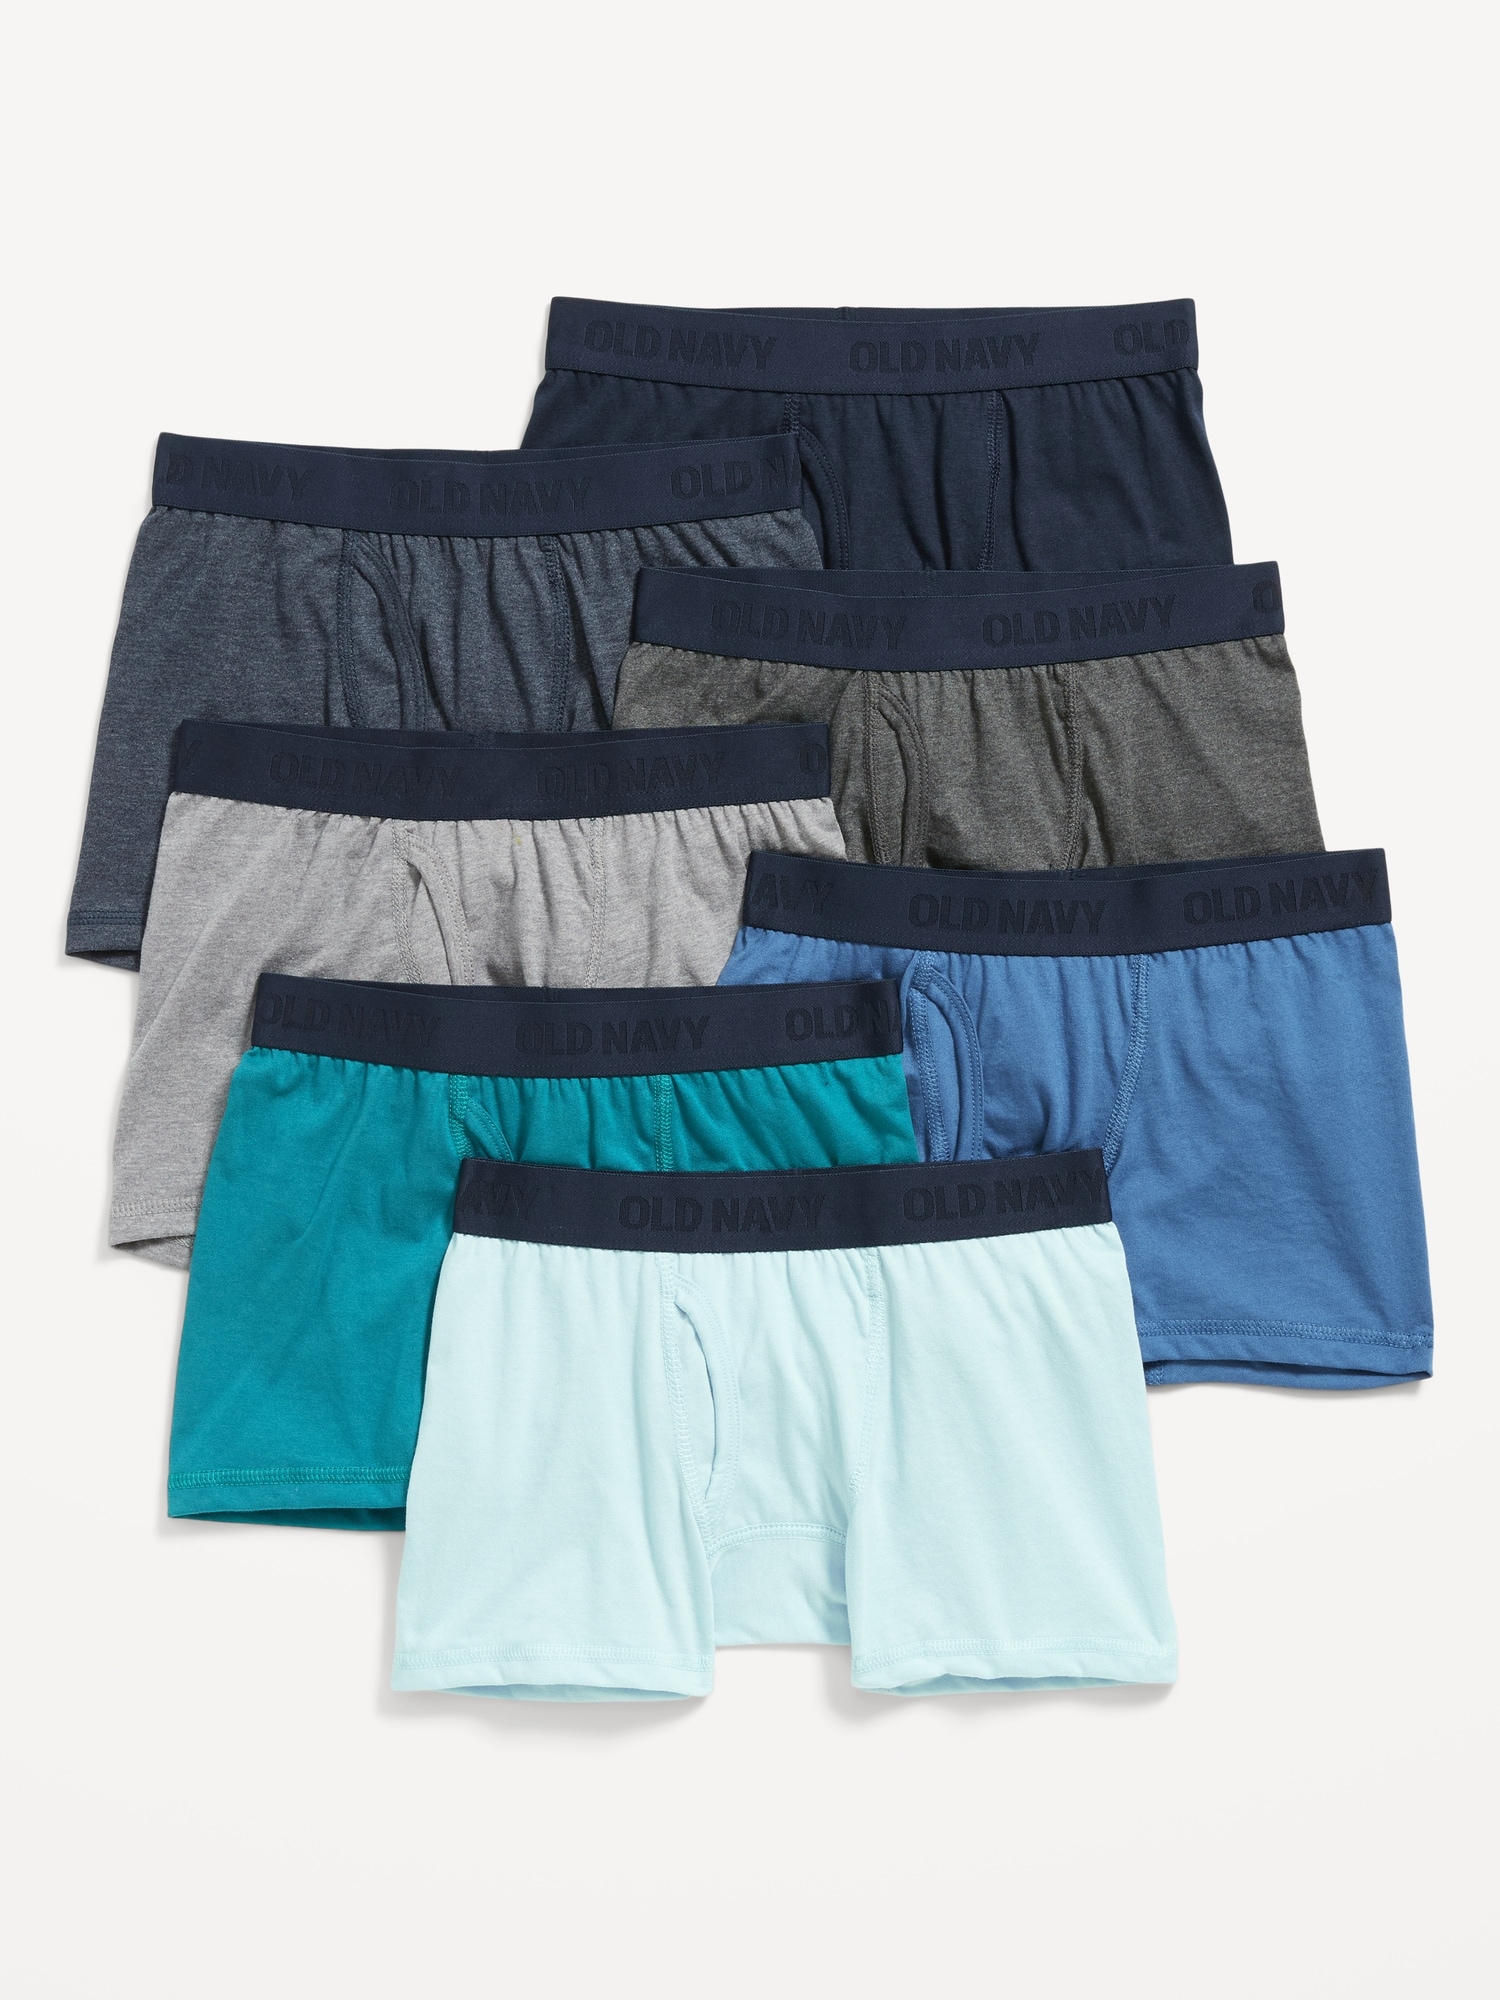 Old Navy Boxer-Briefs Underwear 7-Pack for Boys blue. 1